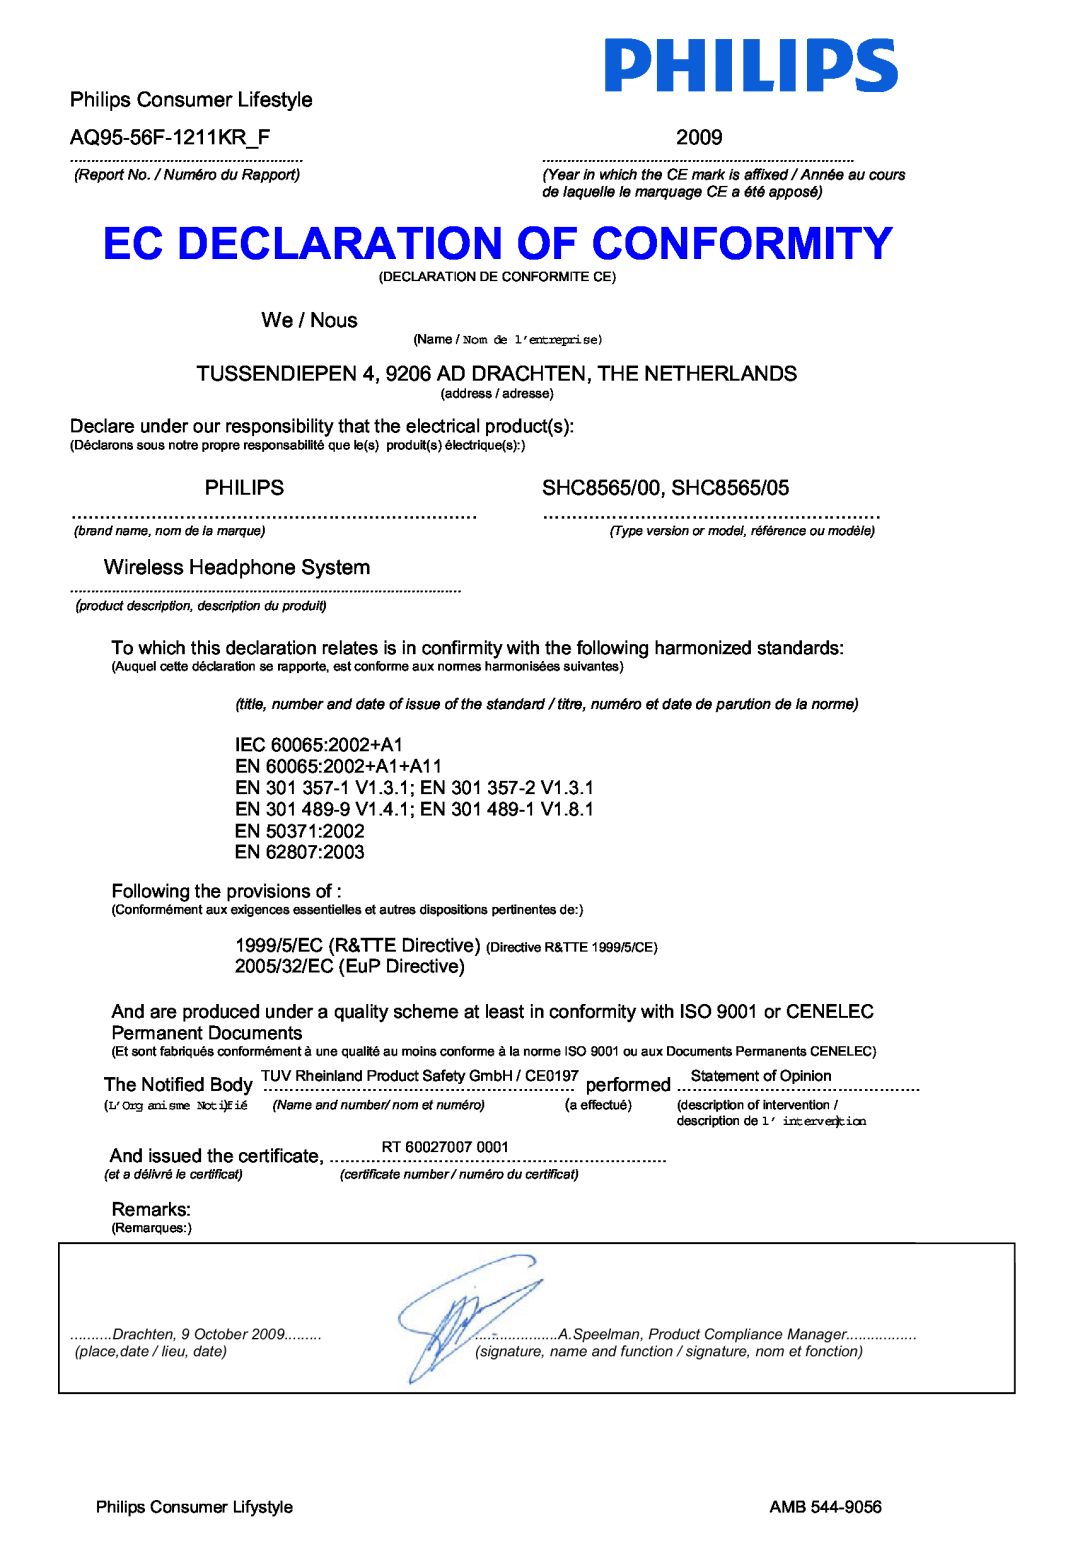 Philips SHC8565/00 manual Ec Declaration Of Conformity, Philips Consumer Lifestyle, AQ95-56F-1211KR_F, 2009, We / Nous 